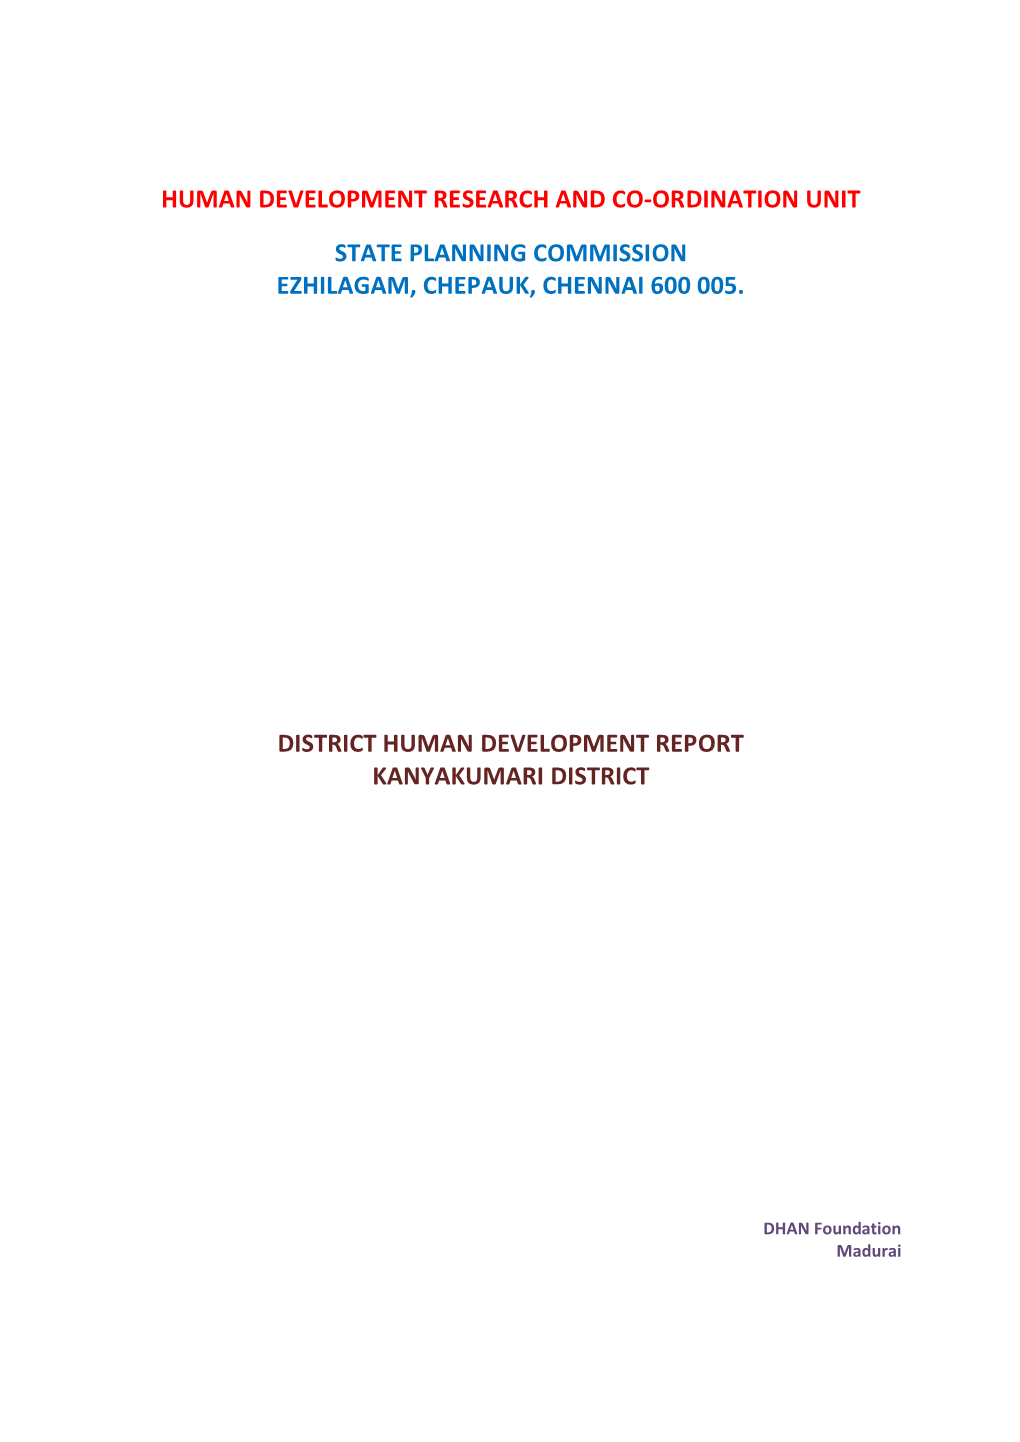 District Human Development Report Kanyakumari District